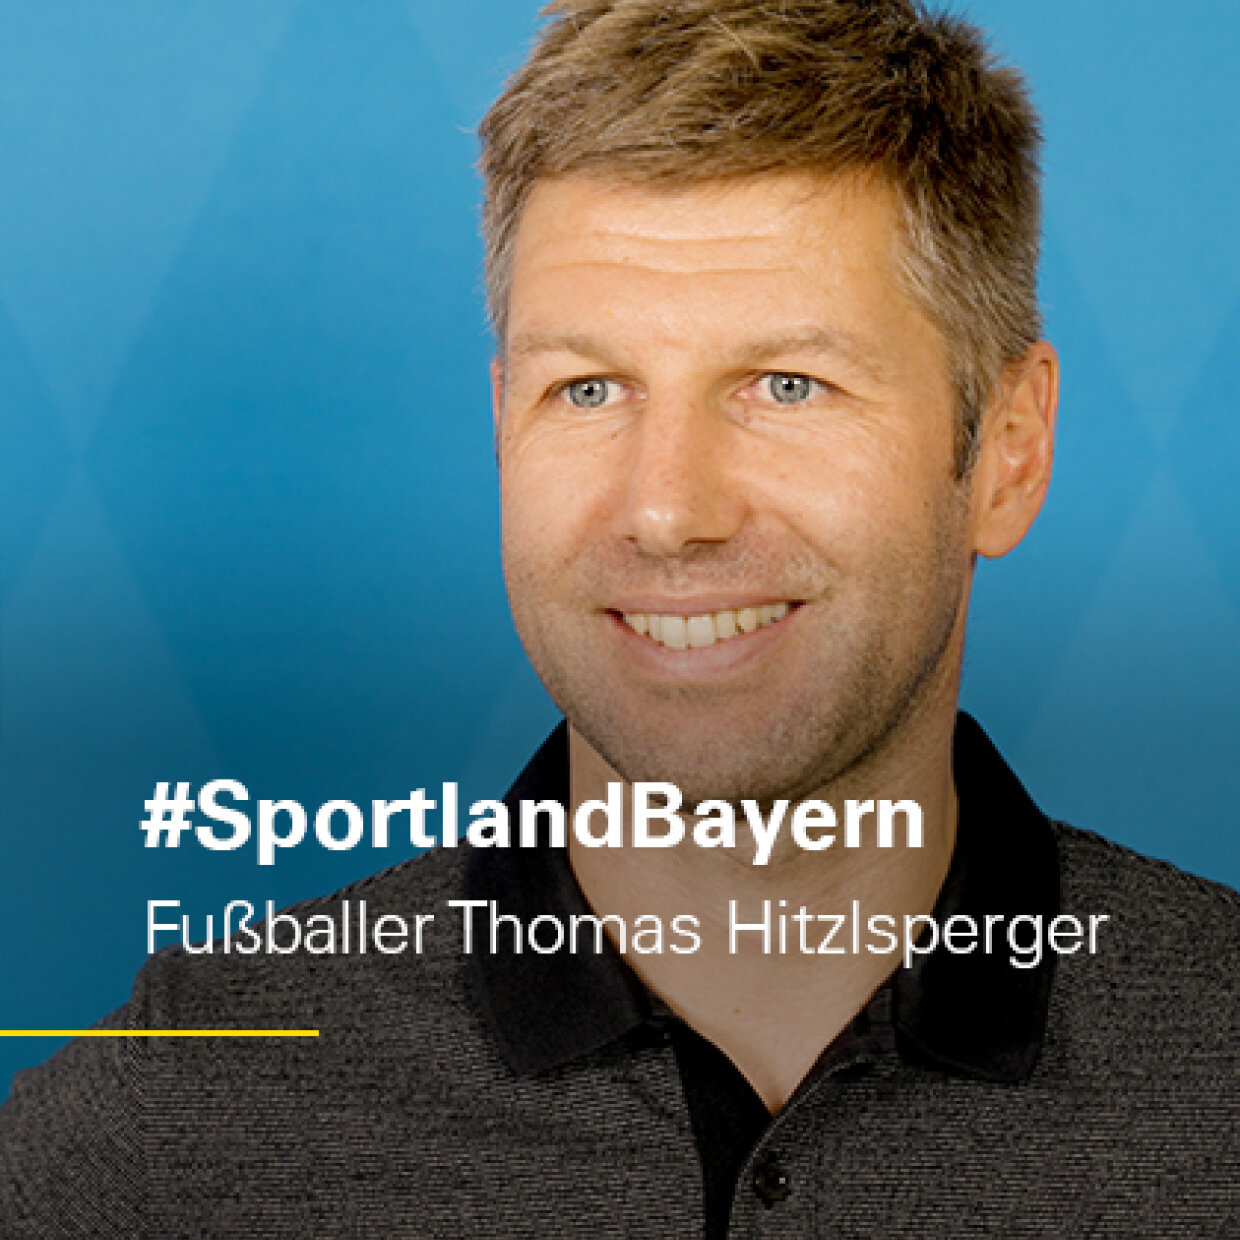  #SportlandBayern: Fußballer Thomas Hitzlsperger 